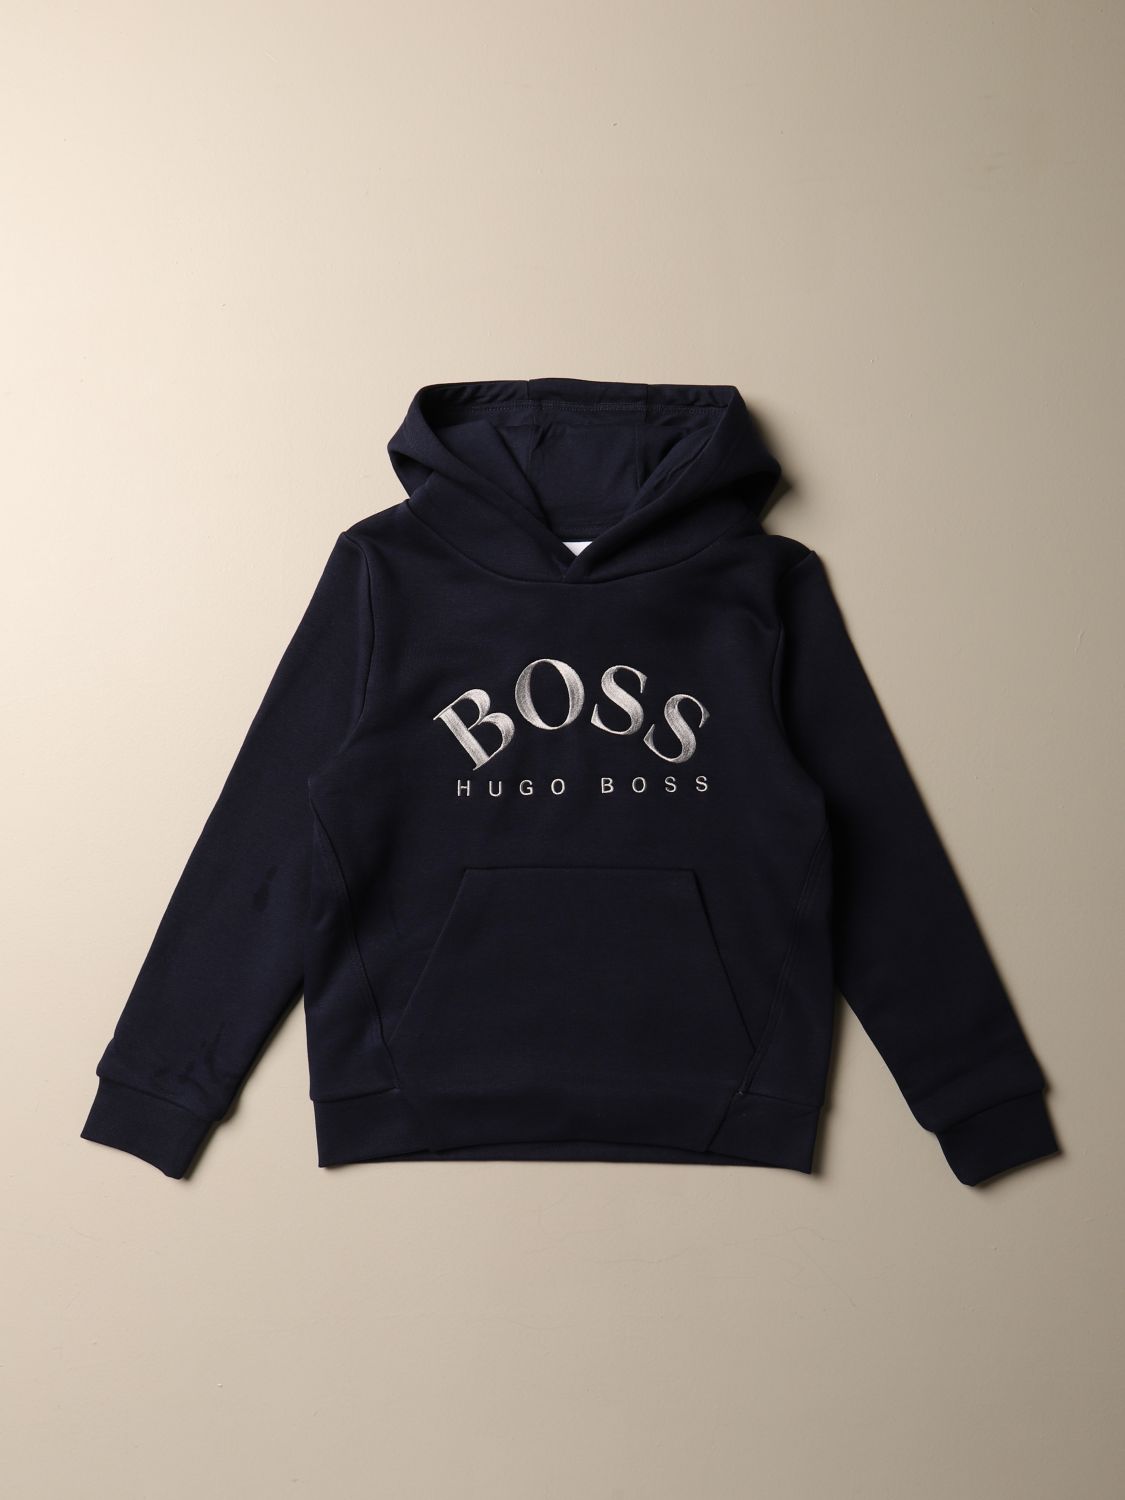 hugo boss blue sweater